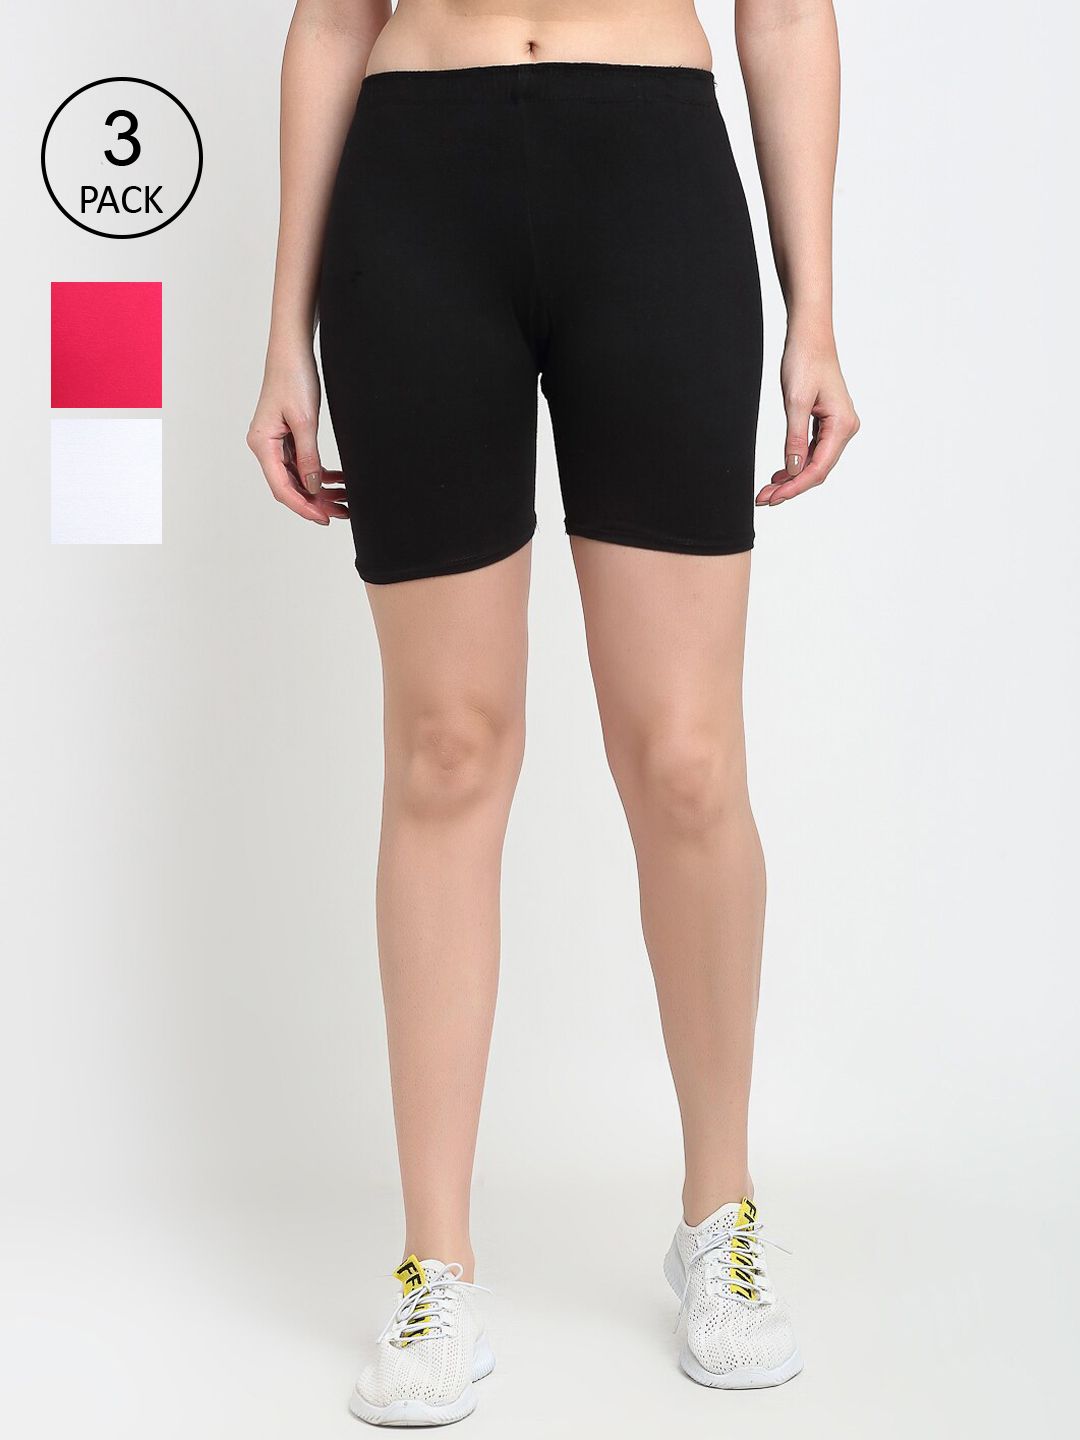 GRACIT Women Black Red & White Set Of 3 Biker Shorts Price in India